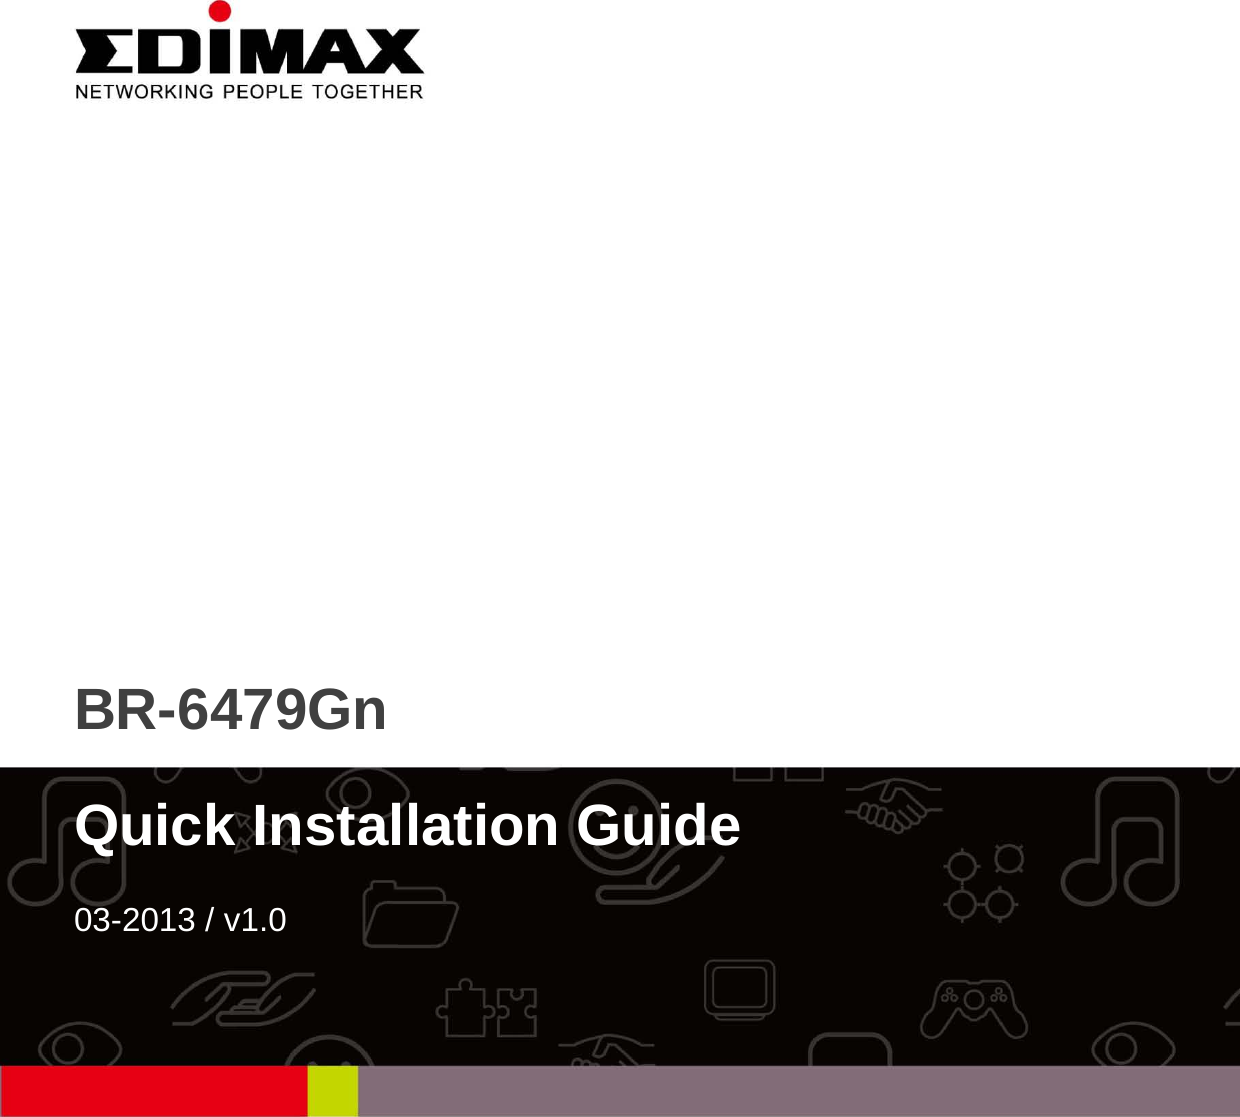                  BR-6479Gn  Quick Installation Guide  03-2013 / v1.0   